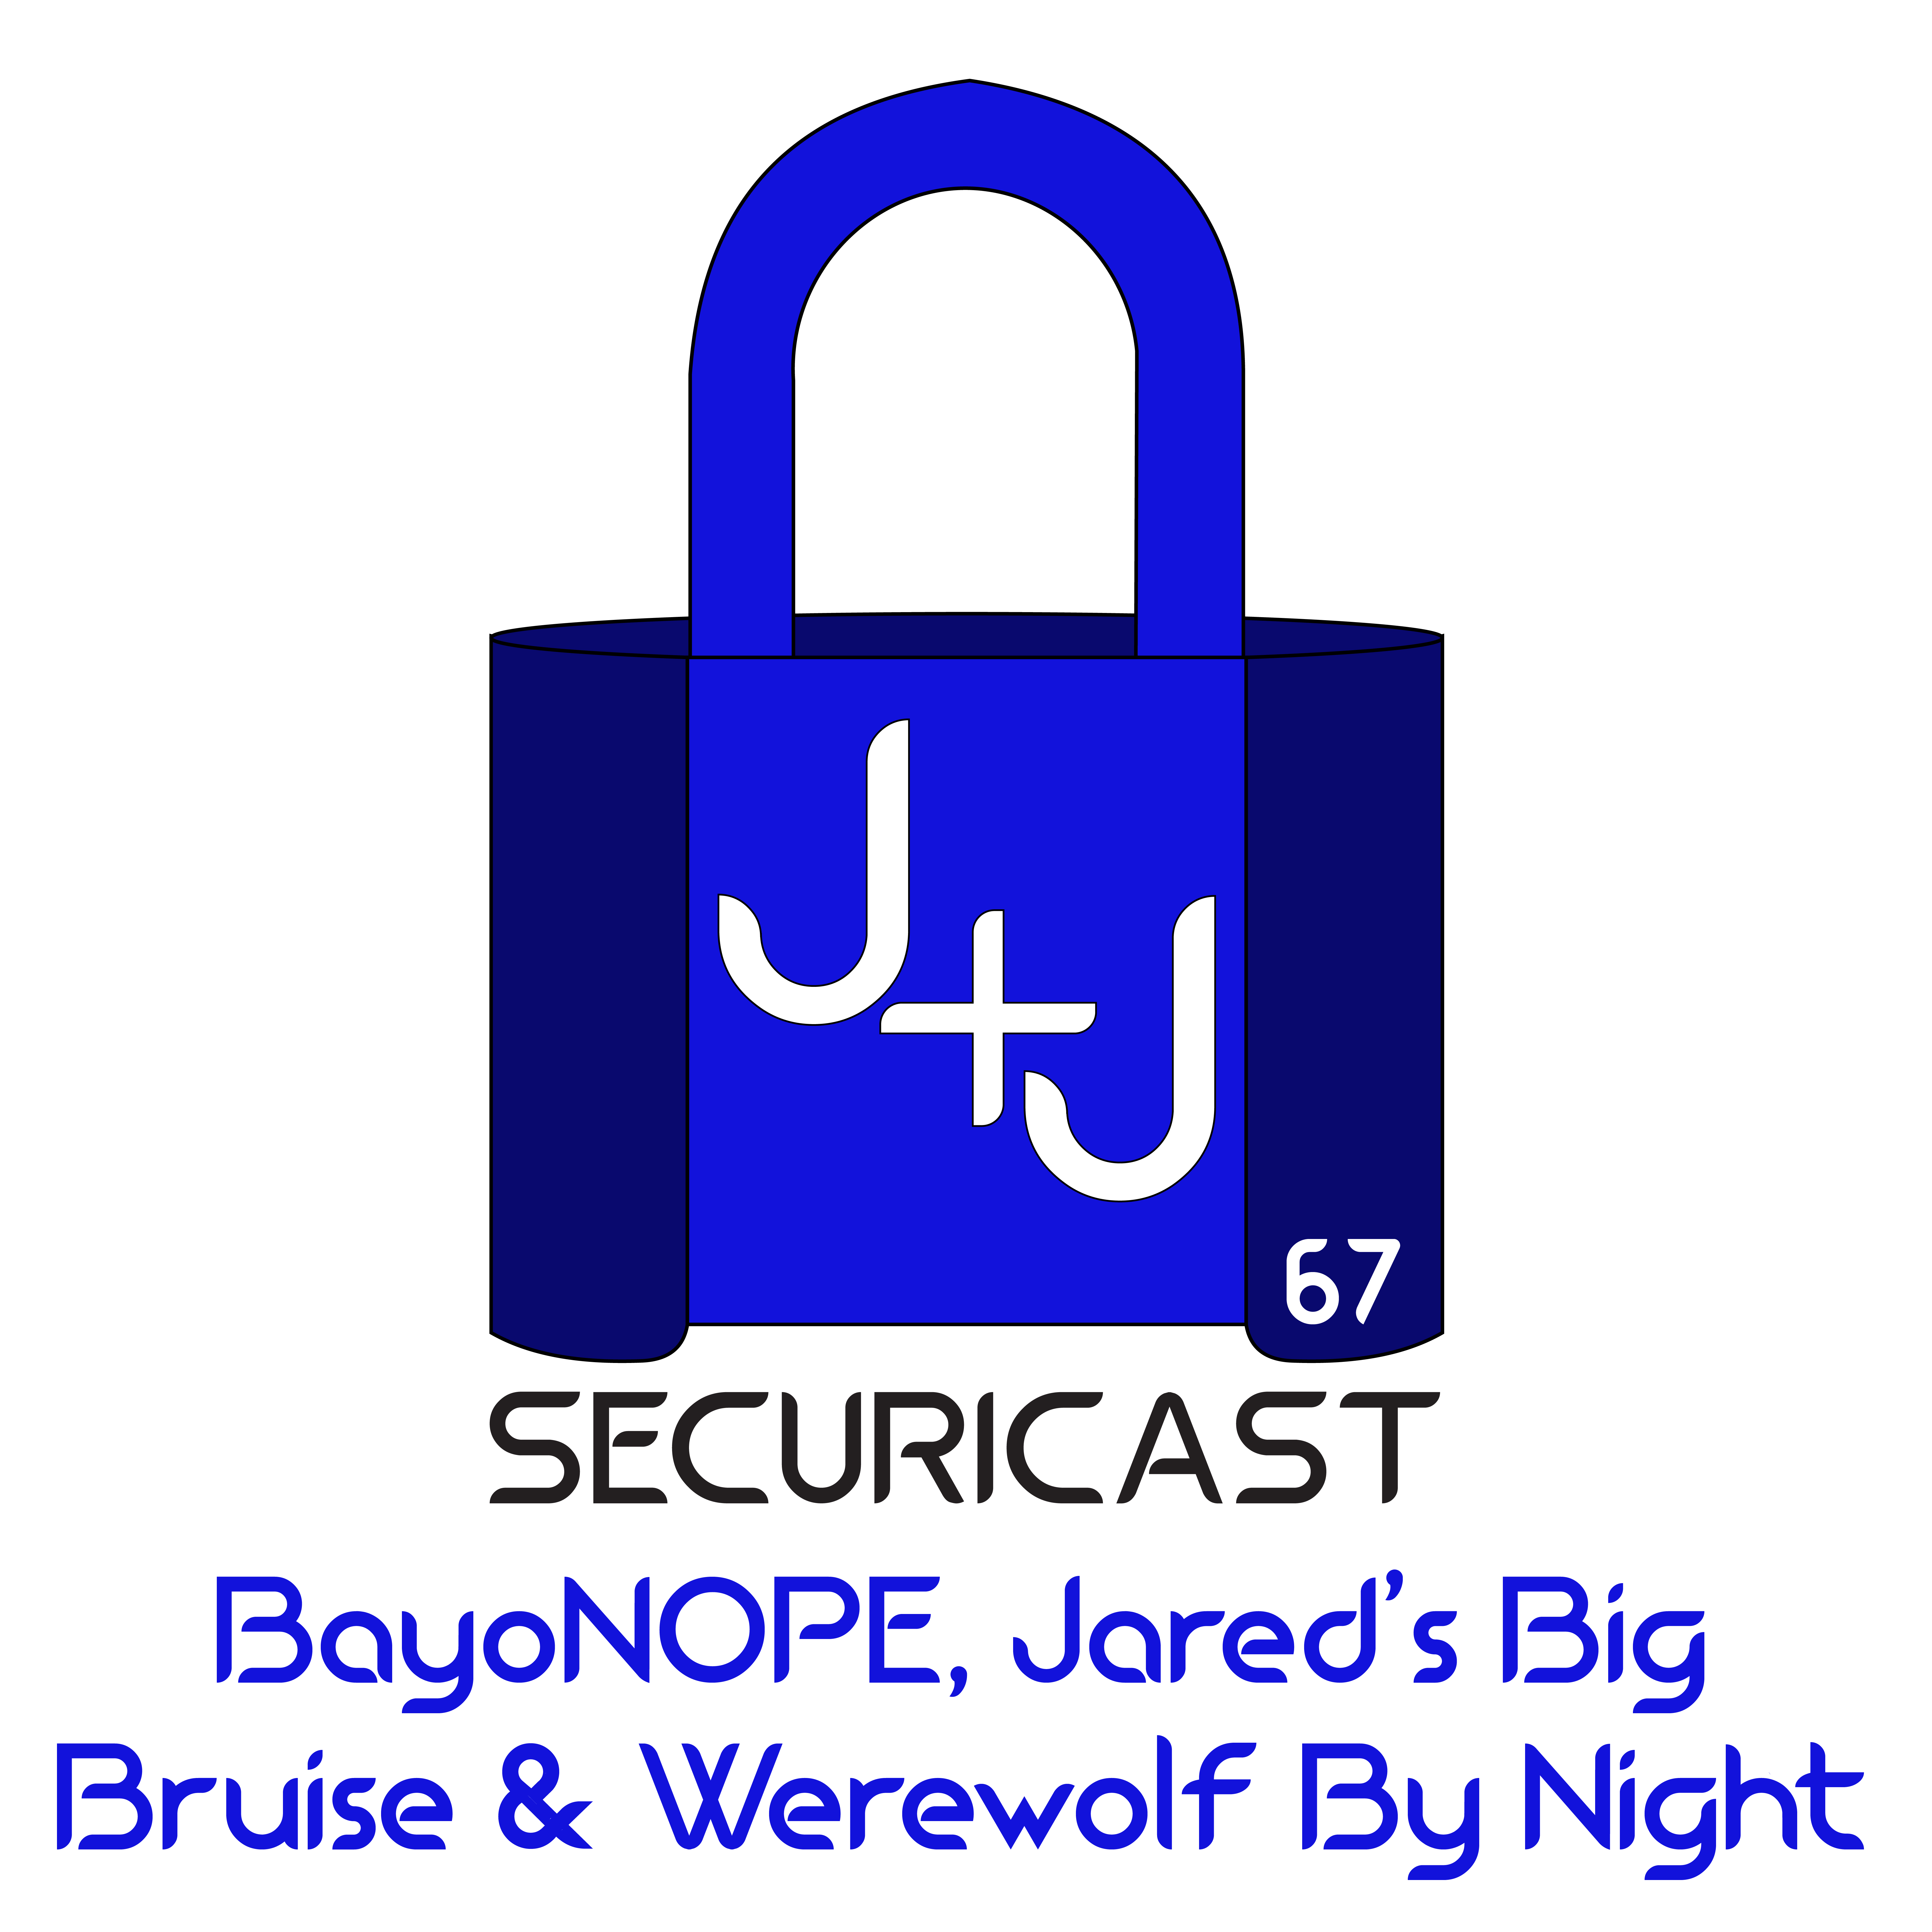 J+J SecuriCast Episode 67 - BayoNOPE, Jared’s Big Bruise & Werewolf By Night